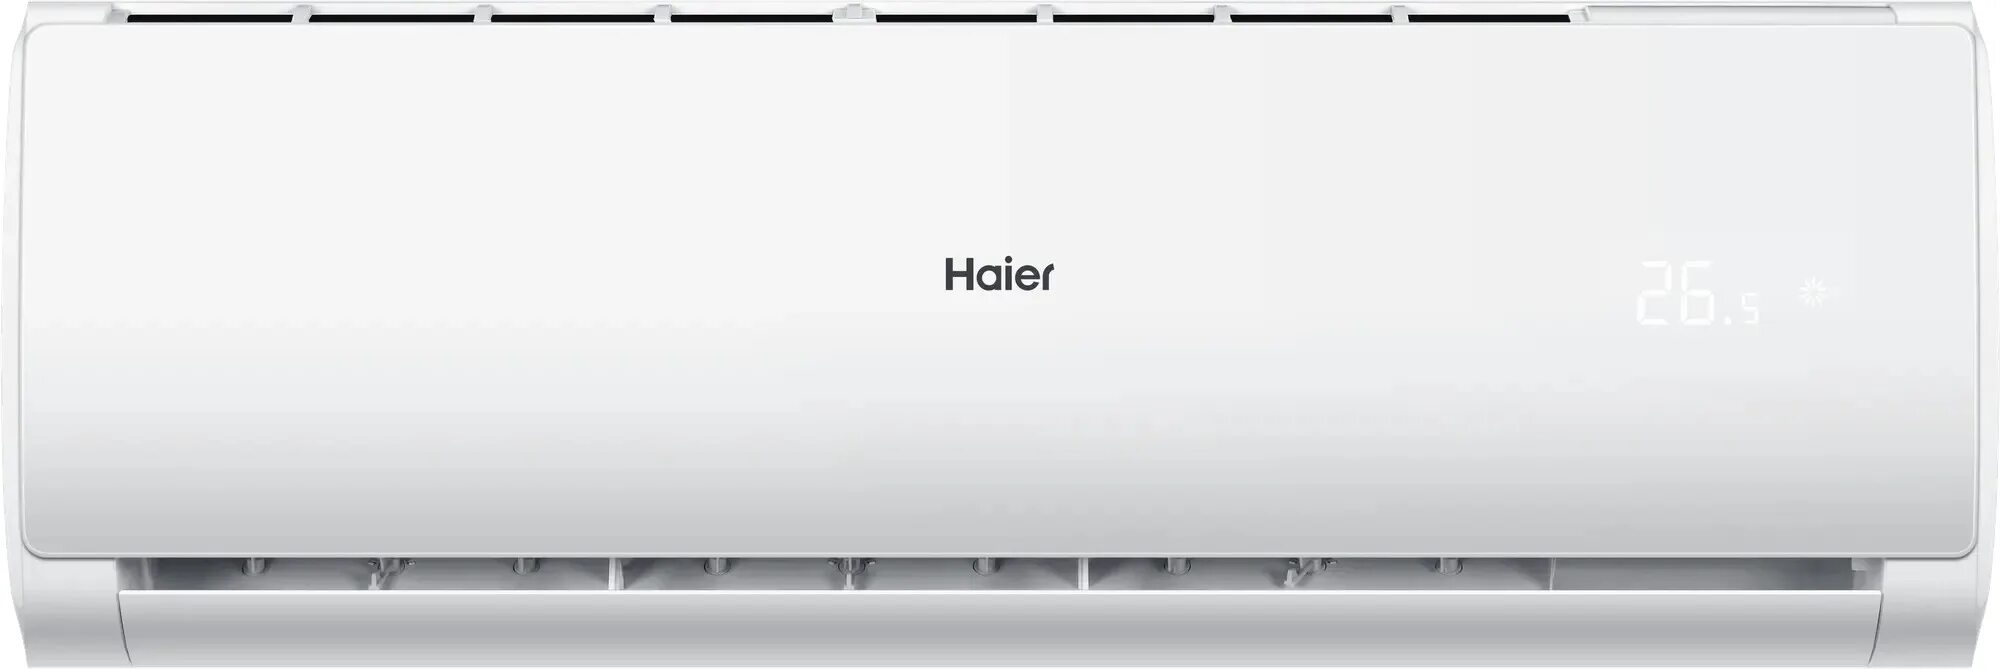 Haier Hsu-07hpl03/r3 Pearl. Кондиционер Haier leader DC as09tl4hra. Сплит-система Haier Hsu-07hpl03/r3 Pearl. Сплит-система Haier Hsu-07hpl03/r3 Pearl on/off. Haier as09tt4hra 1u09tl5fra